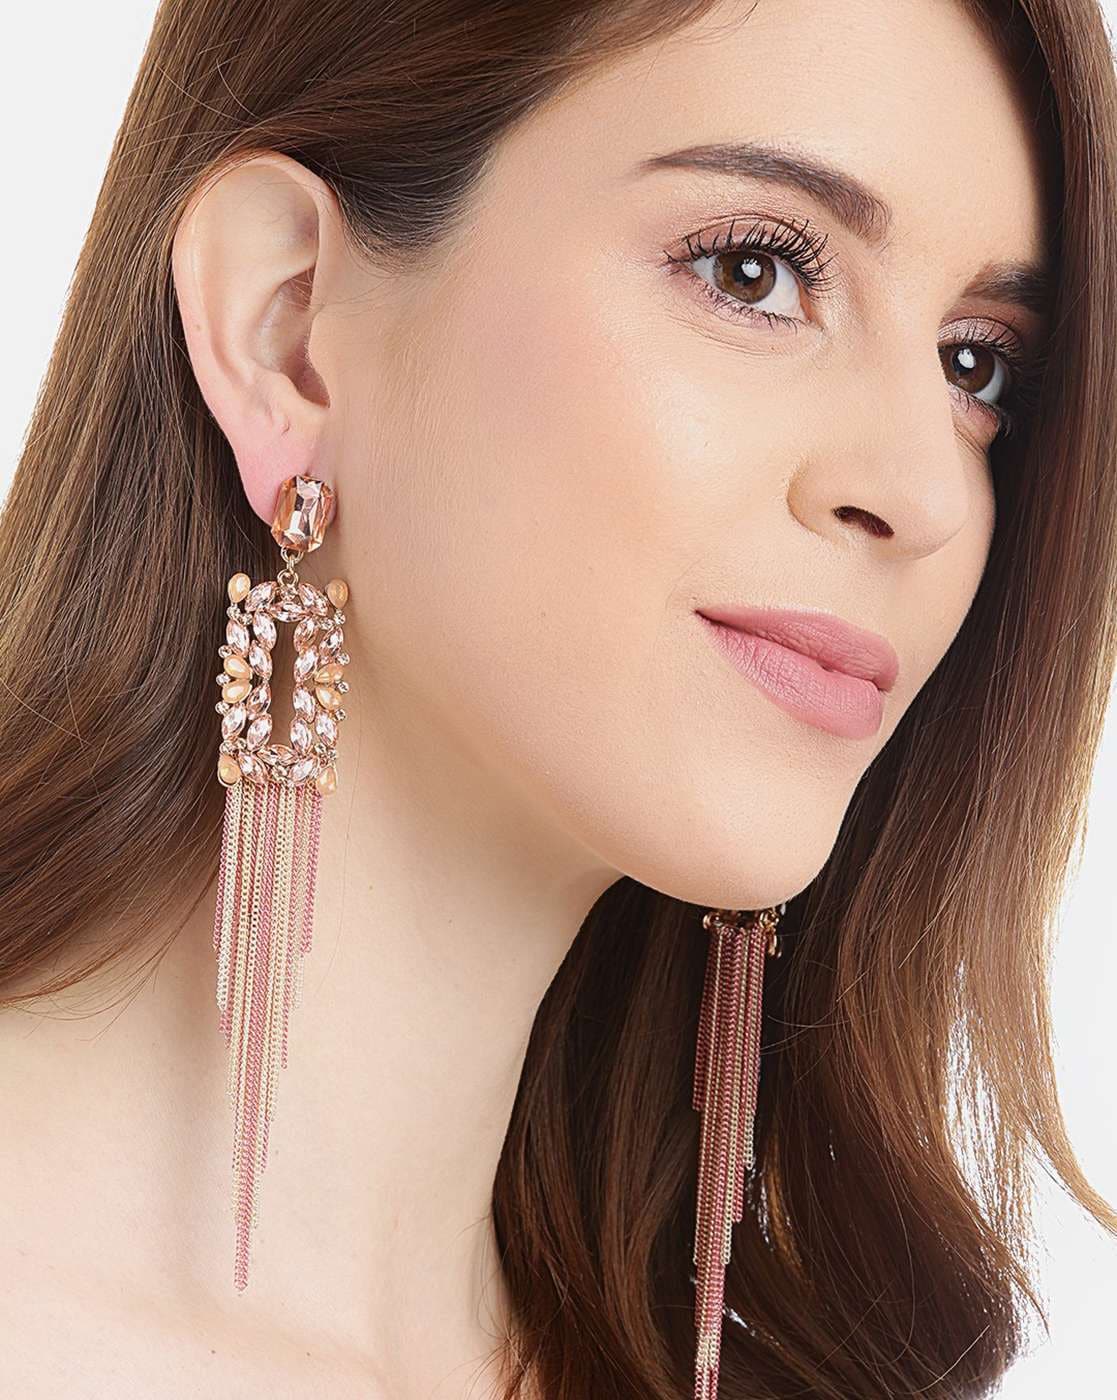 Classic White & Black Beads Fringe Earrings Online Shopping India Women  Chunky Long Earrings Jewelry Wholesale - AliExpress